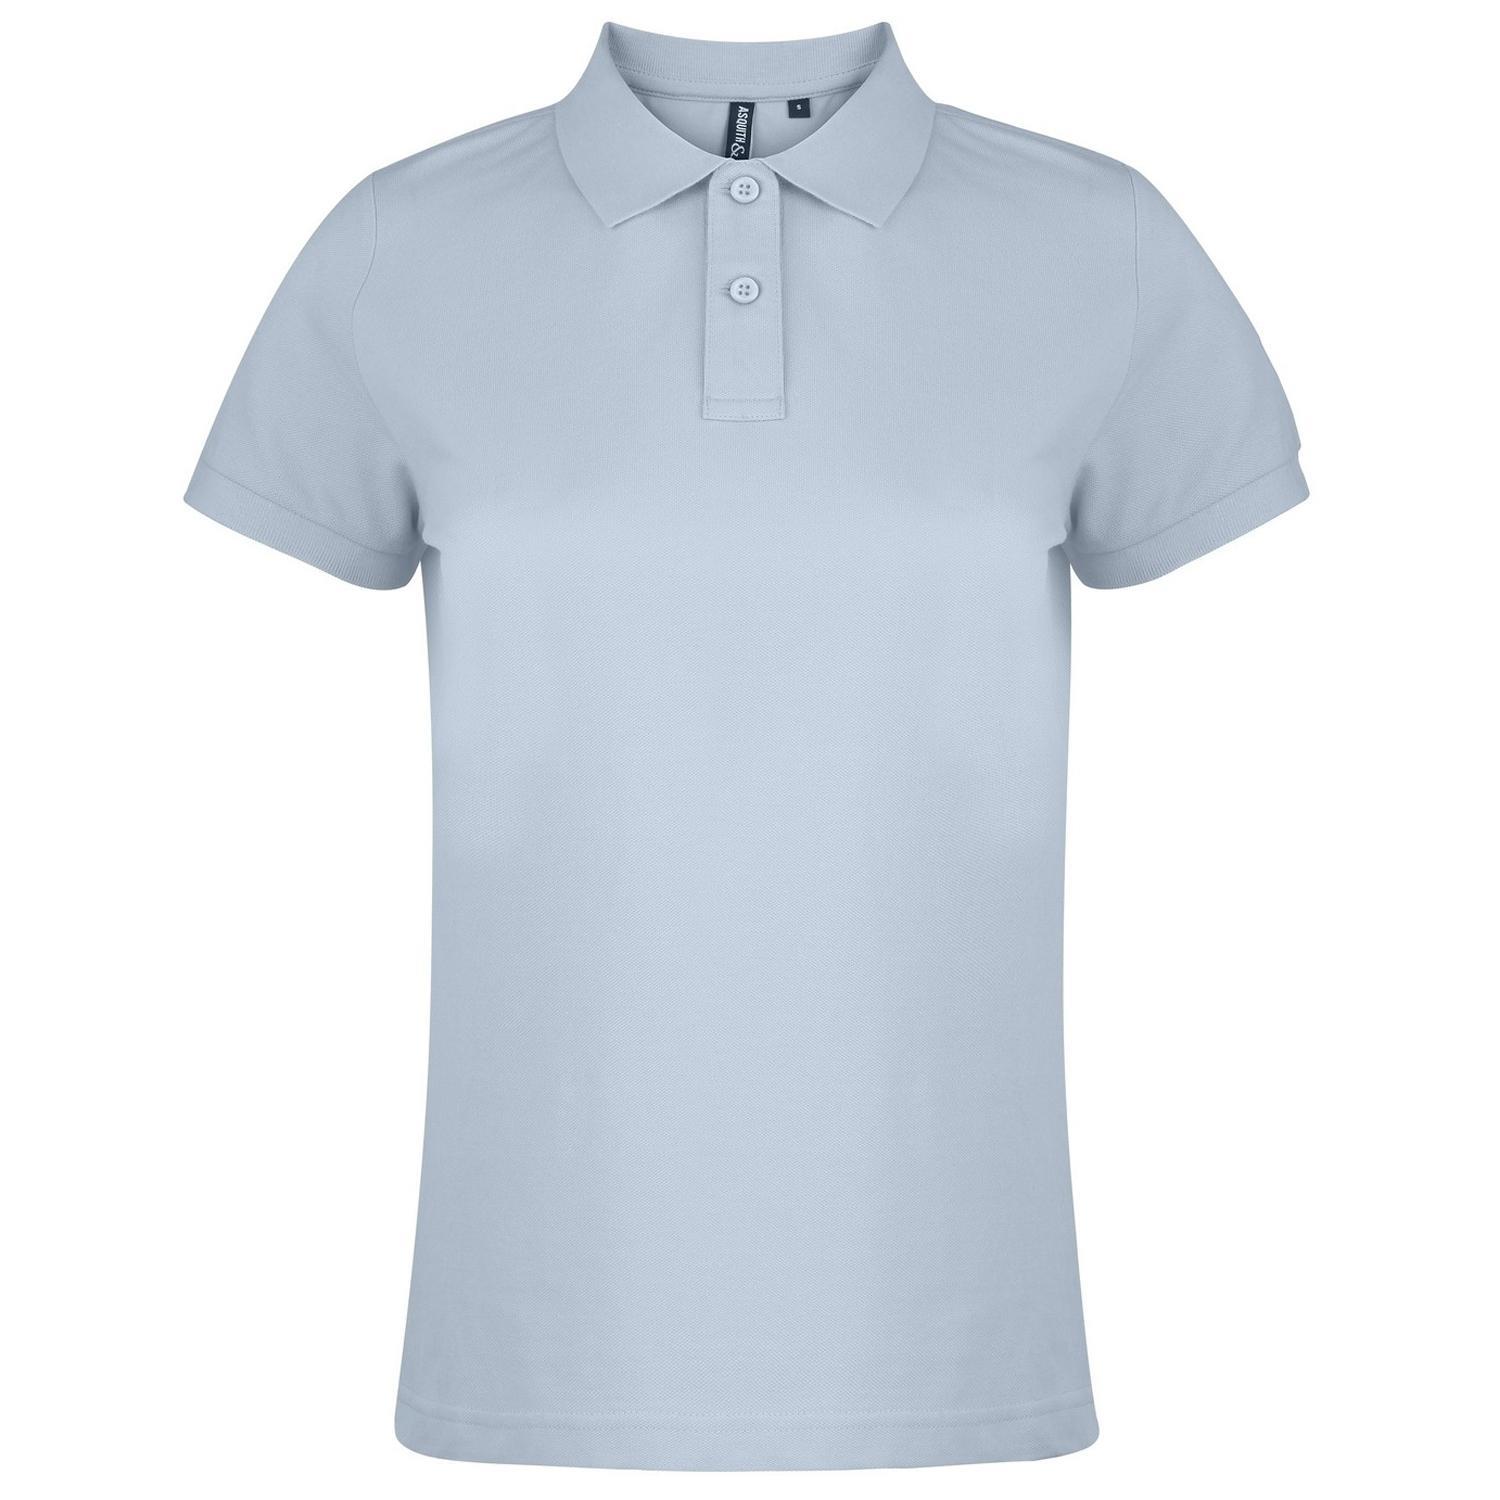 Asquith & Fox Womens/Ladies Plain Short Sleeve Polo Shirt (Turquoise) (L)